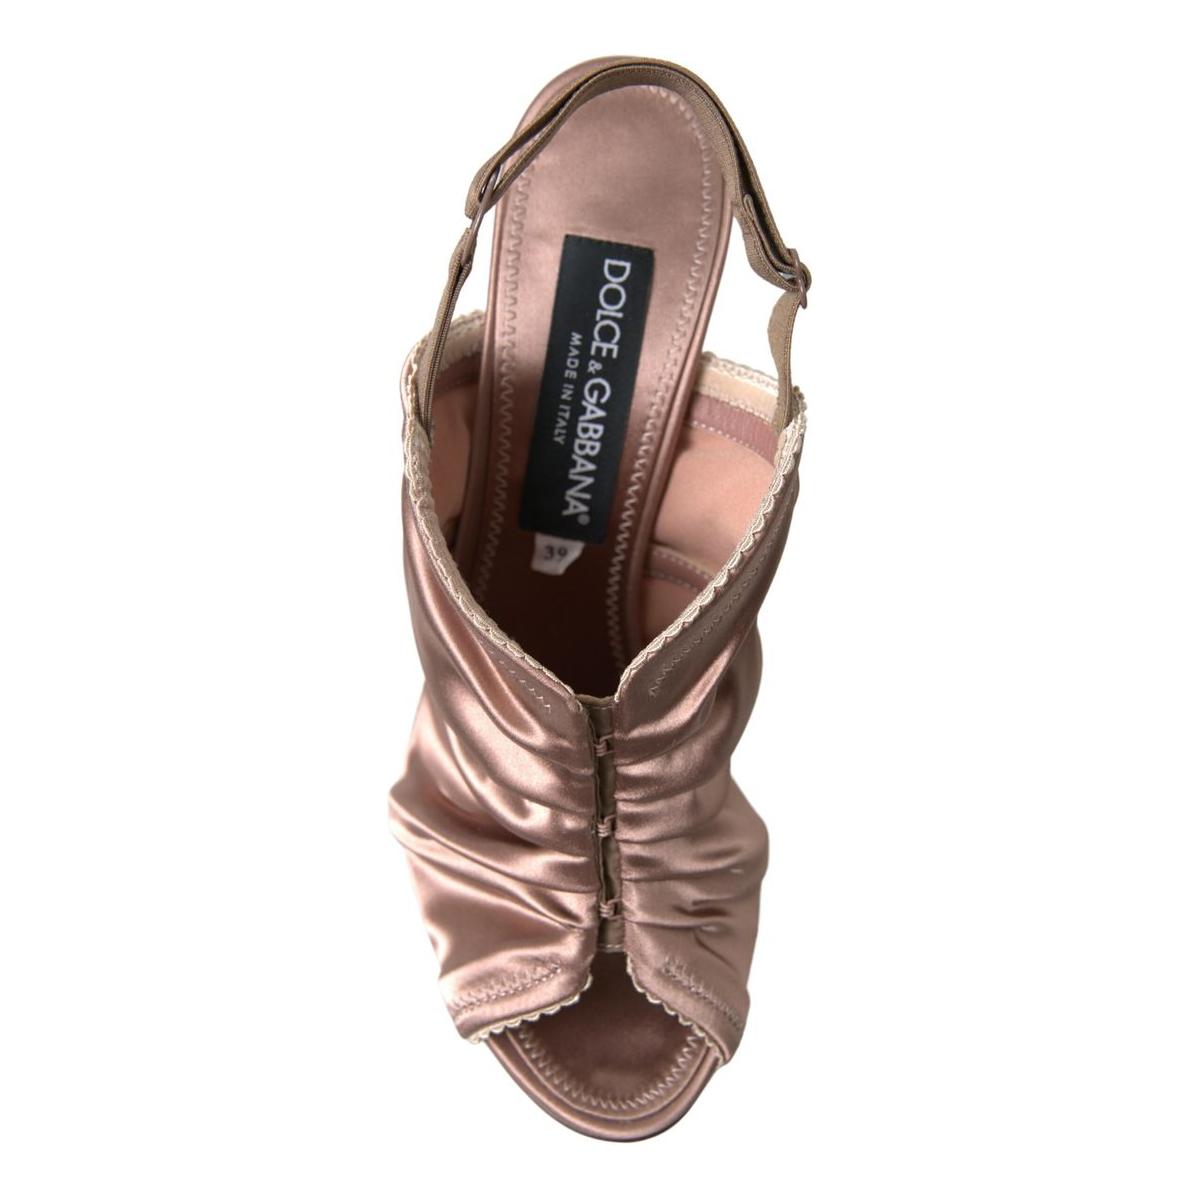 Dolce & Gabbana Elegant Slingback Stiletto Heels in Light Brown light-brown-slingback-corset-style-fastening-stiletto-heels 465A8696-scaled-c642a79e-b90_2b8a2dcb-9709-47a4-95c4-a31e2bc54d31.jpg